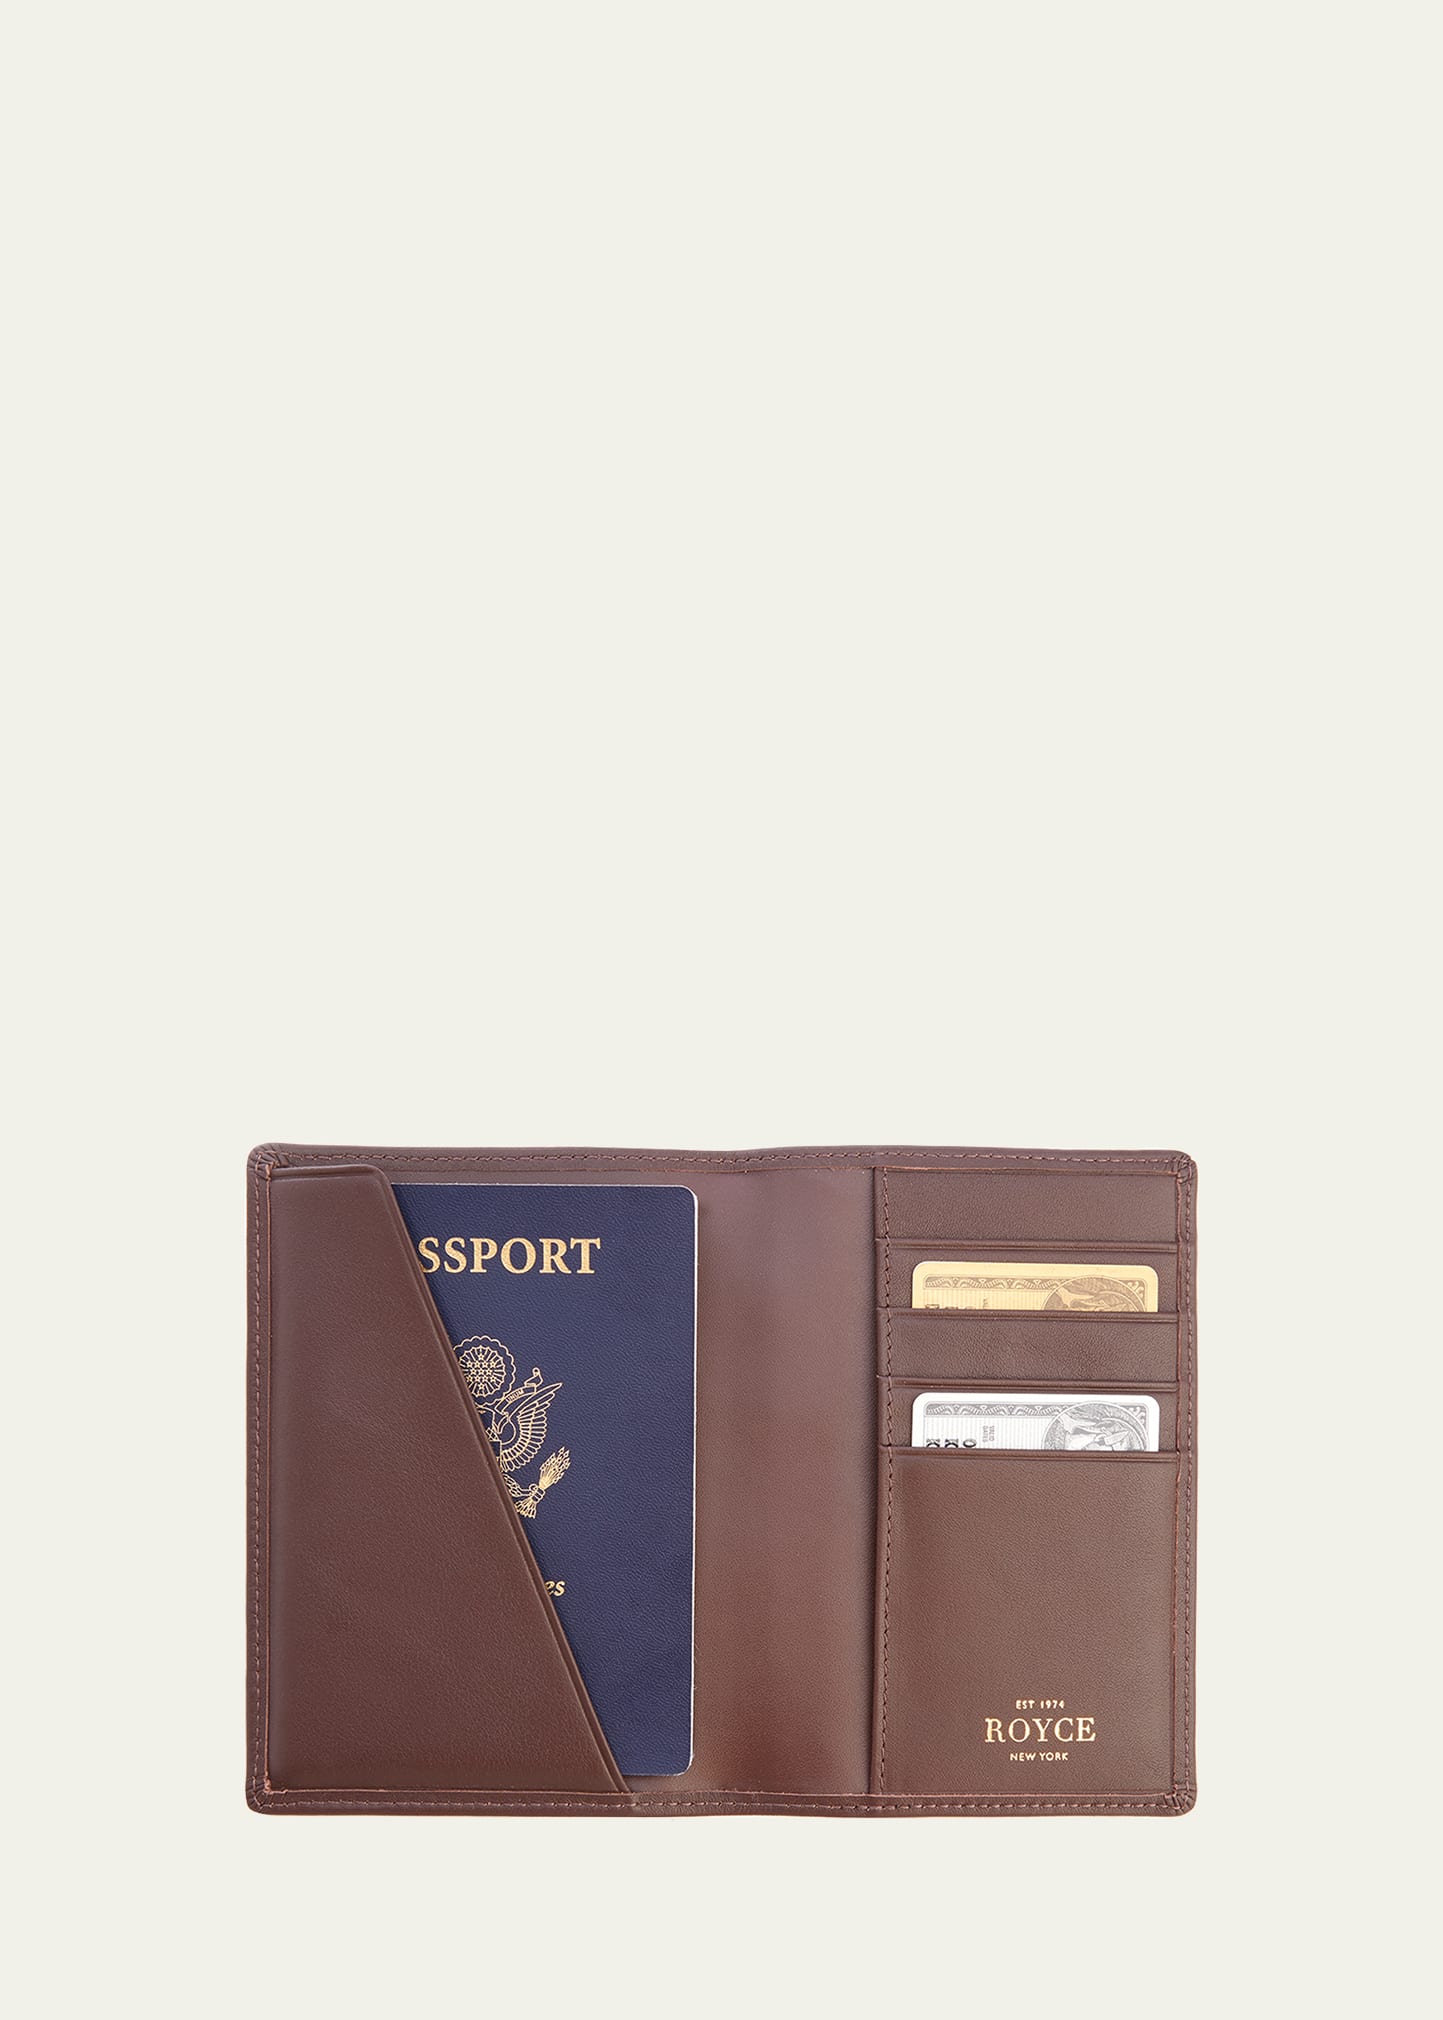 Royce New York Rfid Blocking Passport Case In Brown